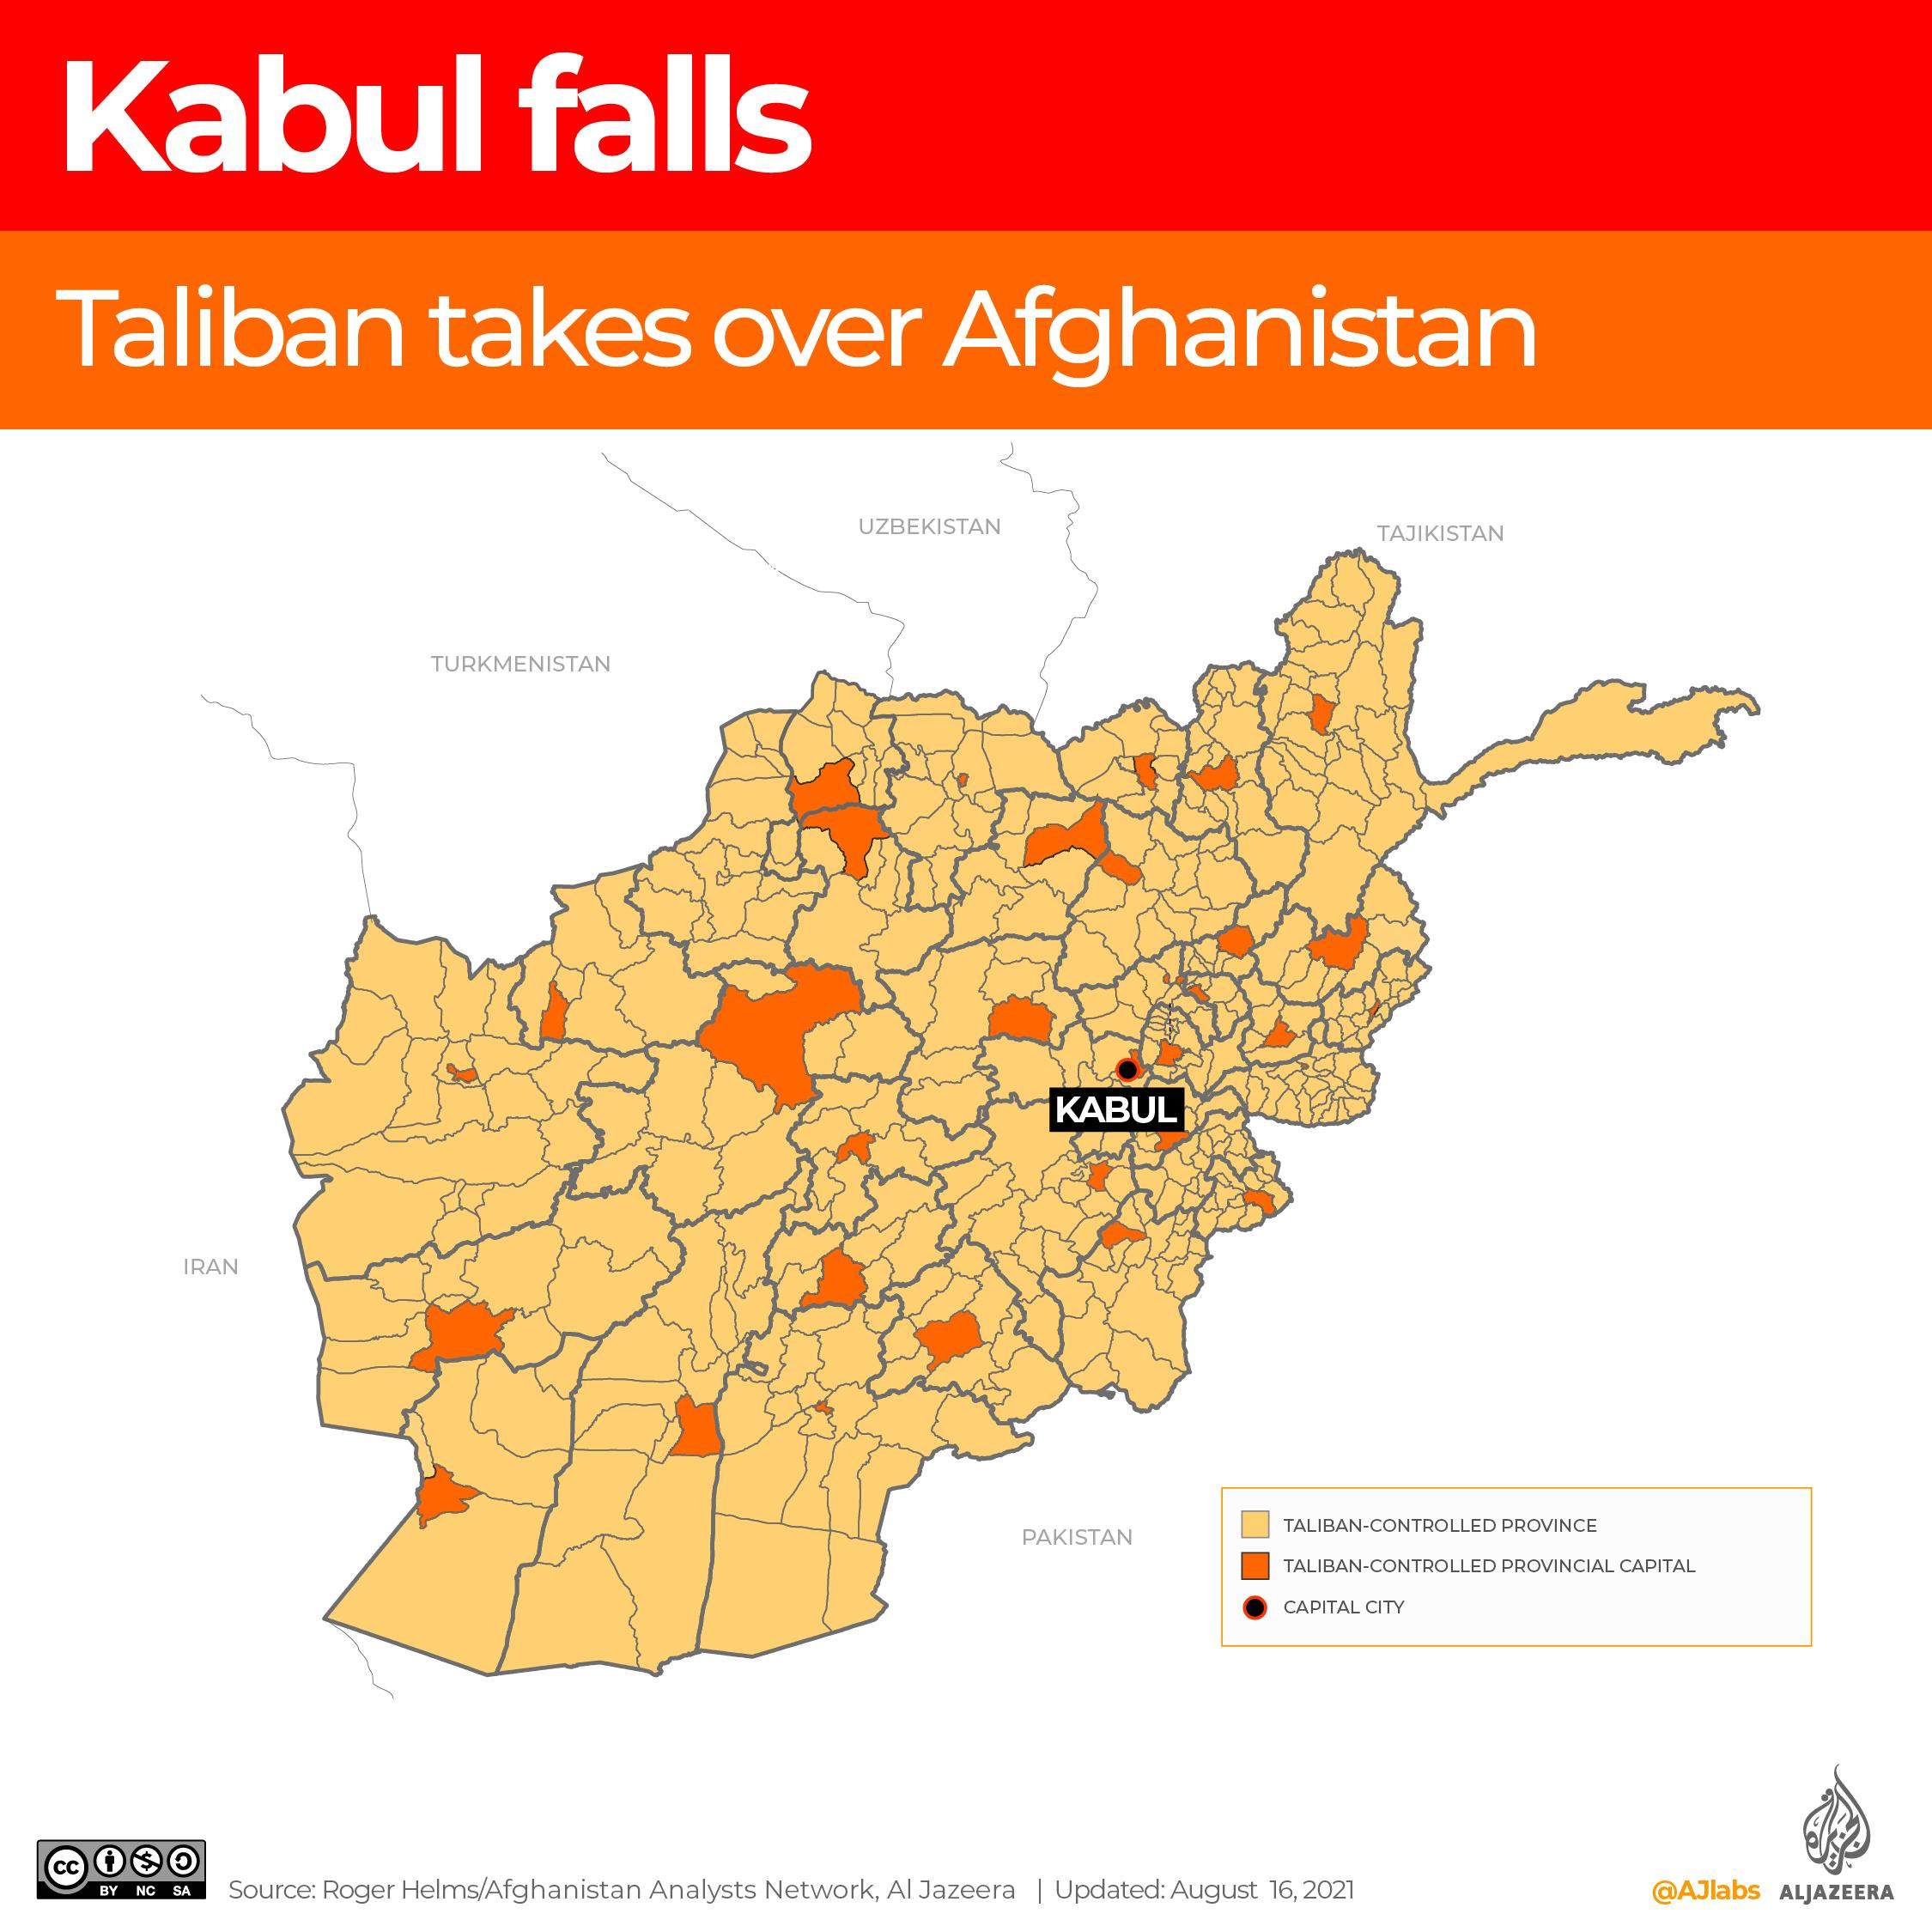 Мапа контролю Афганістану 